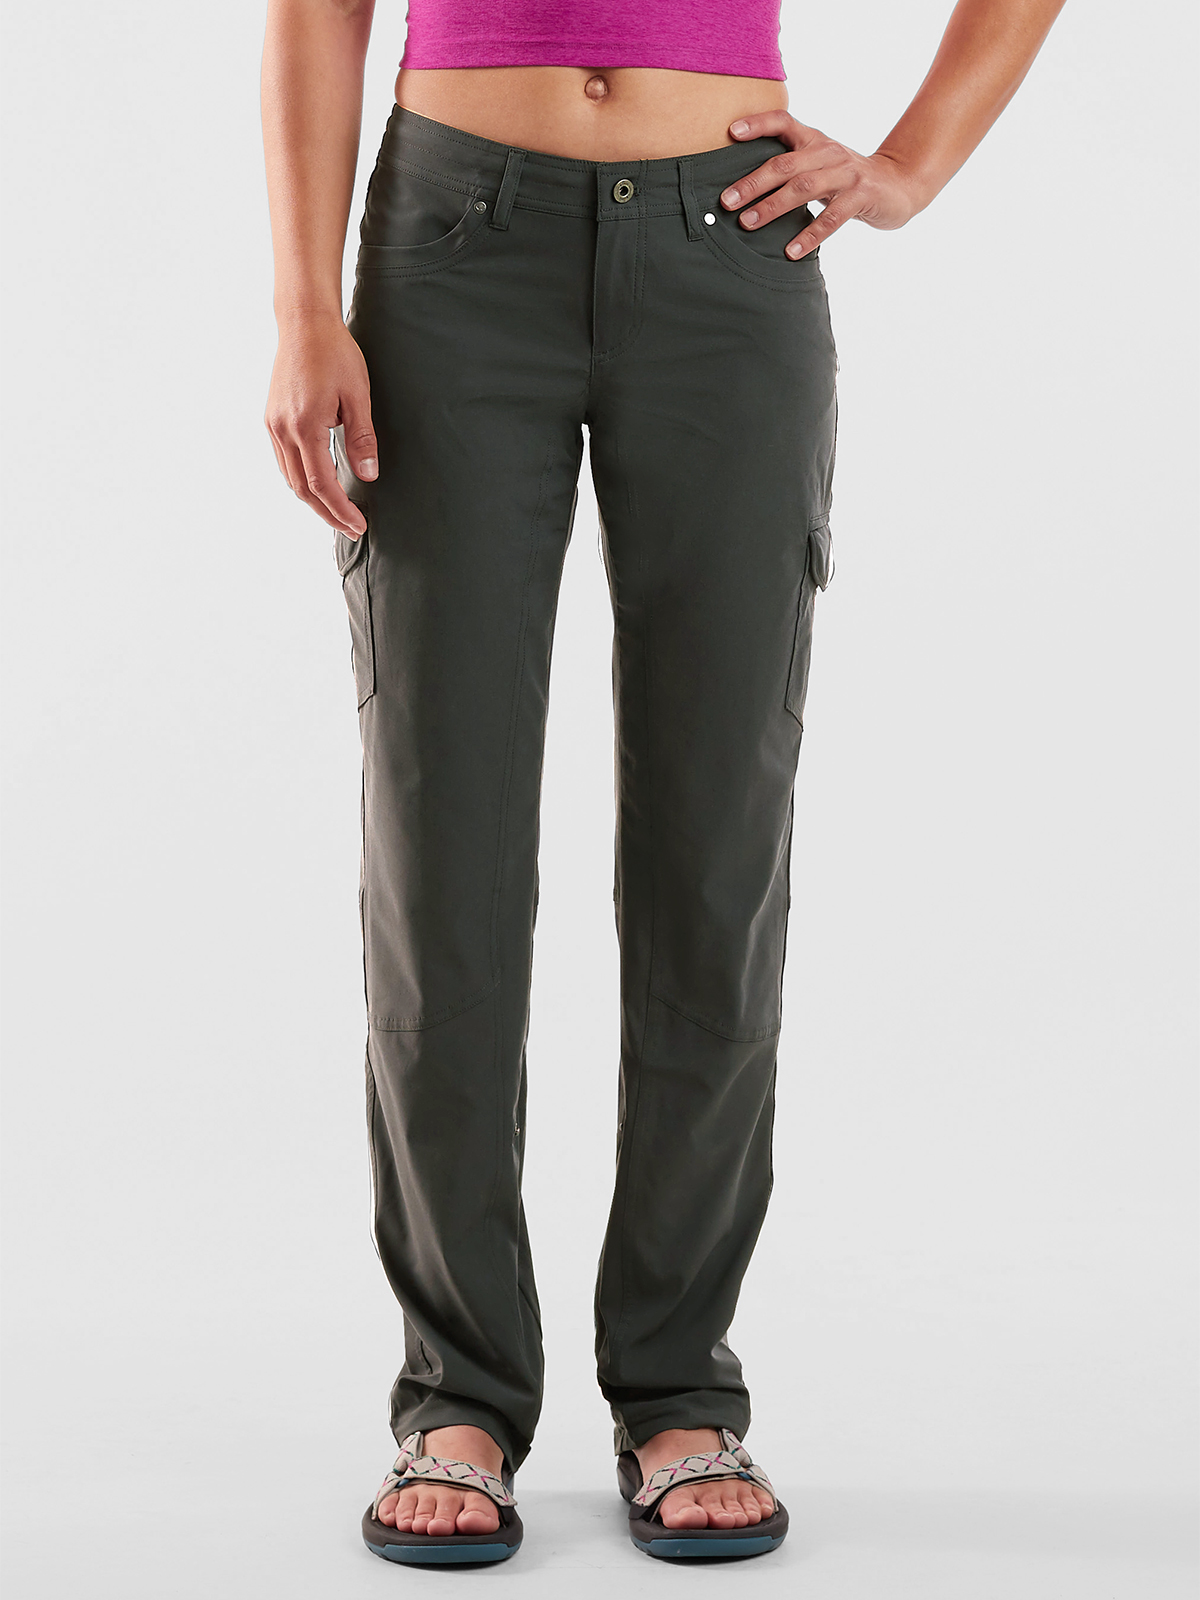 Khaki trouser women - Plus size - Straight leg 2 back pockets - Belore Slims